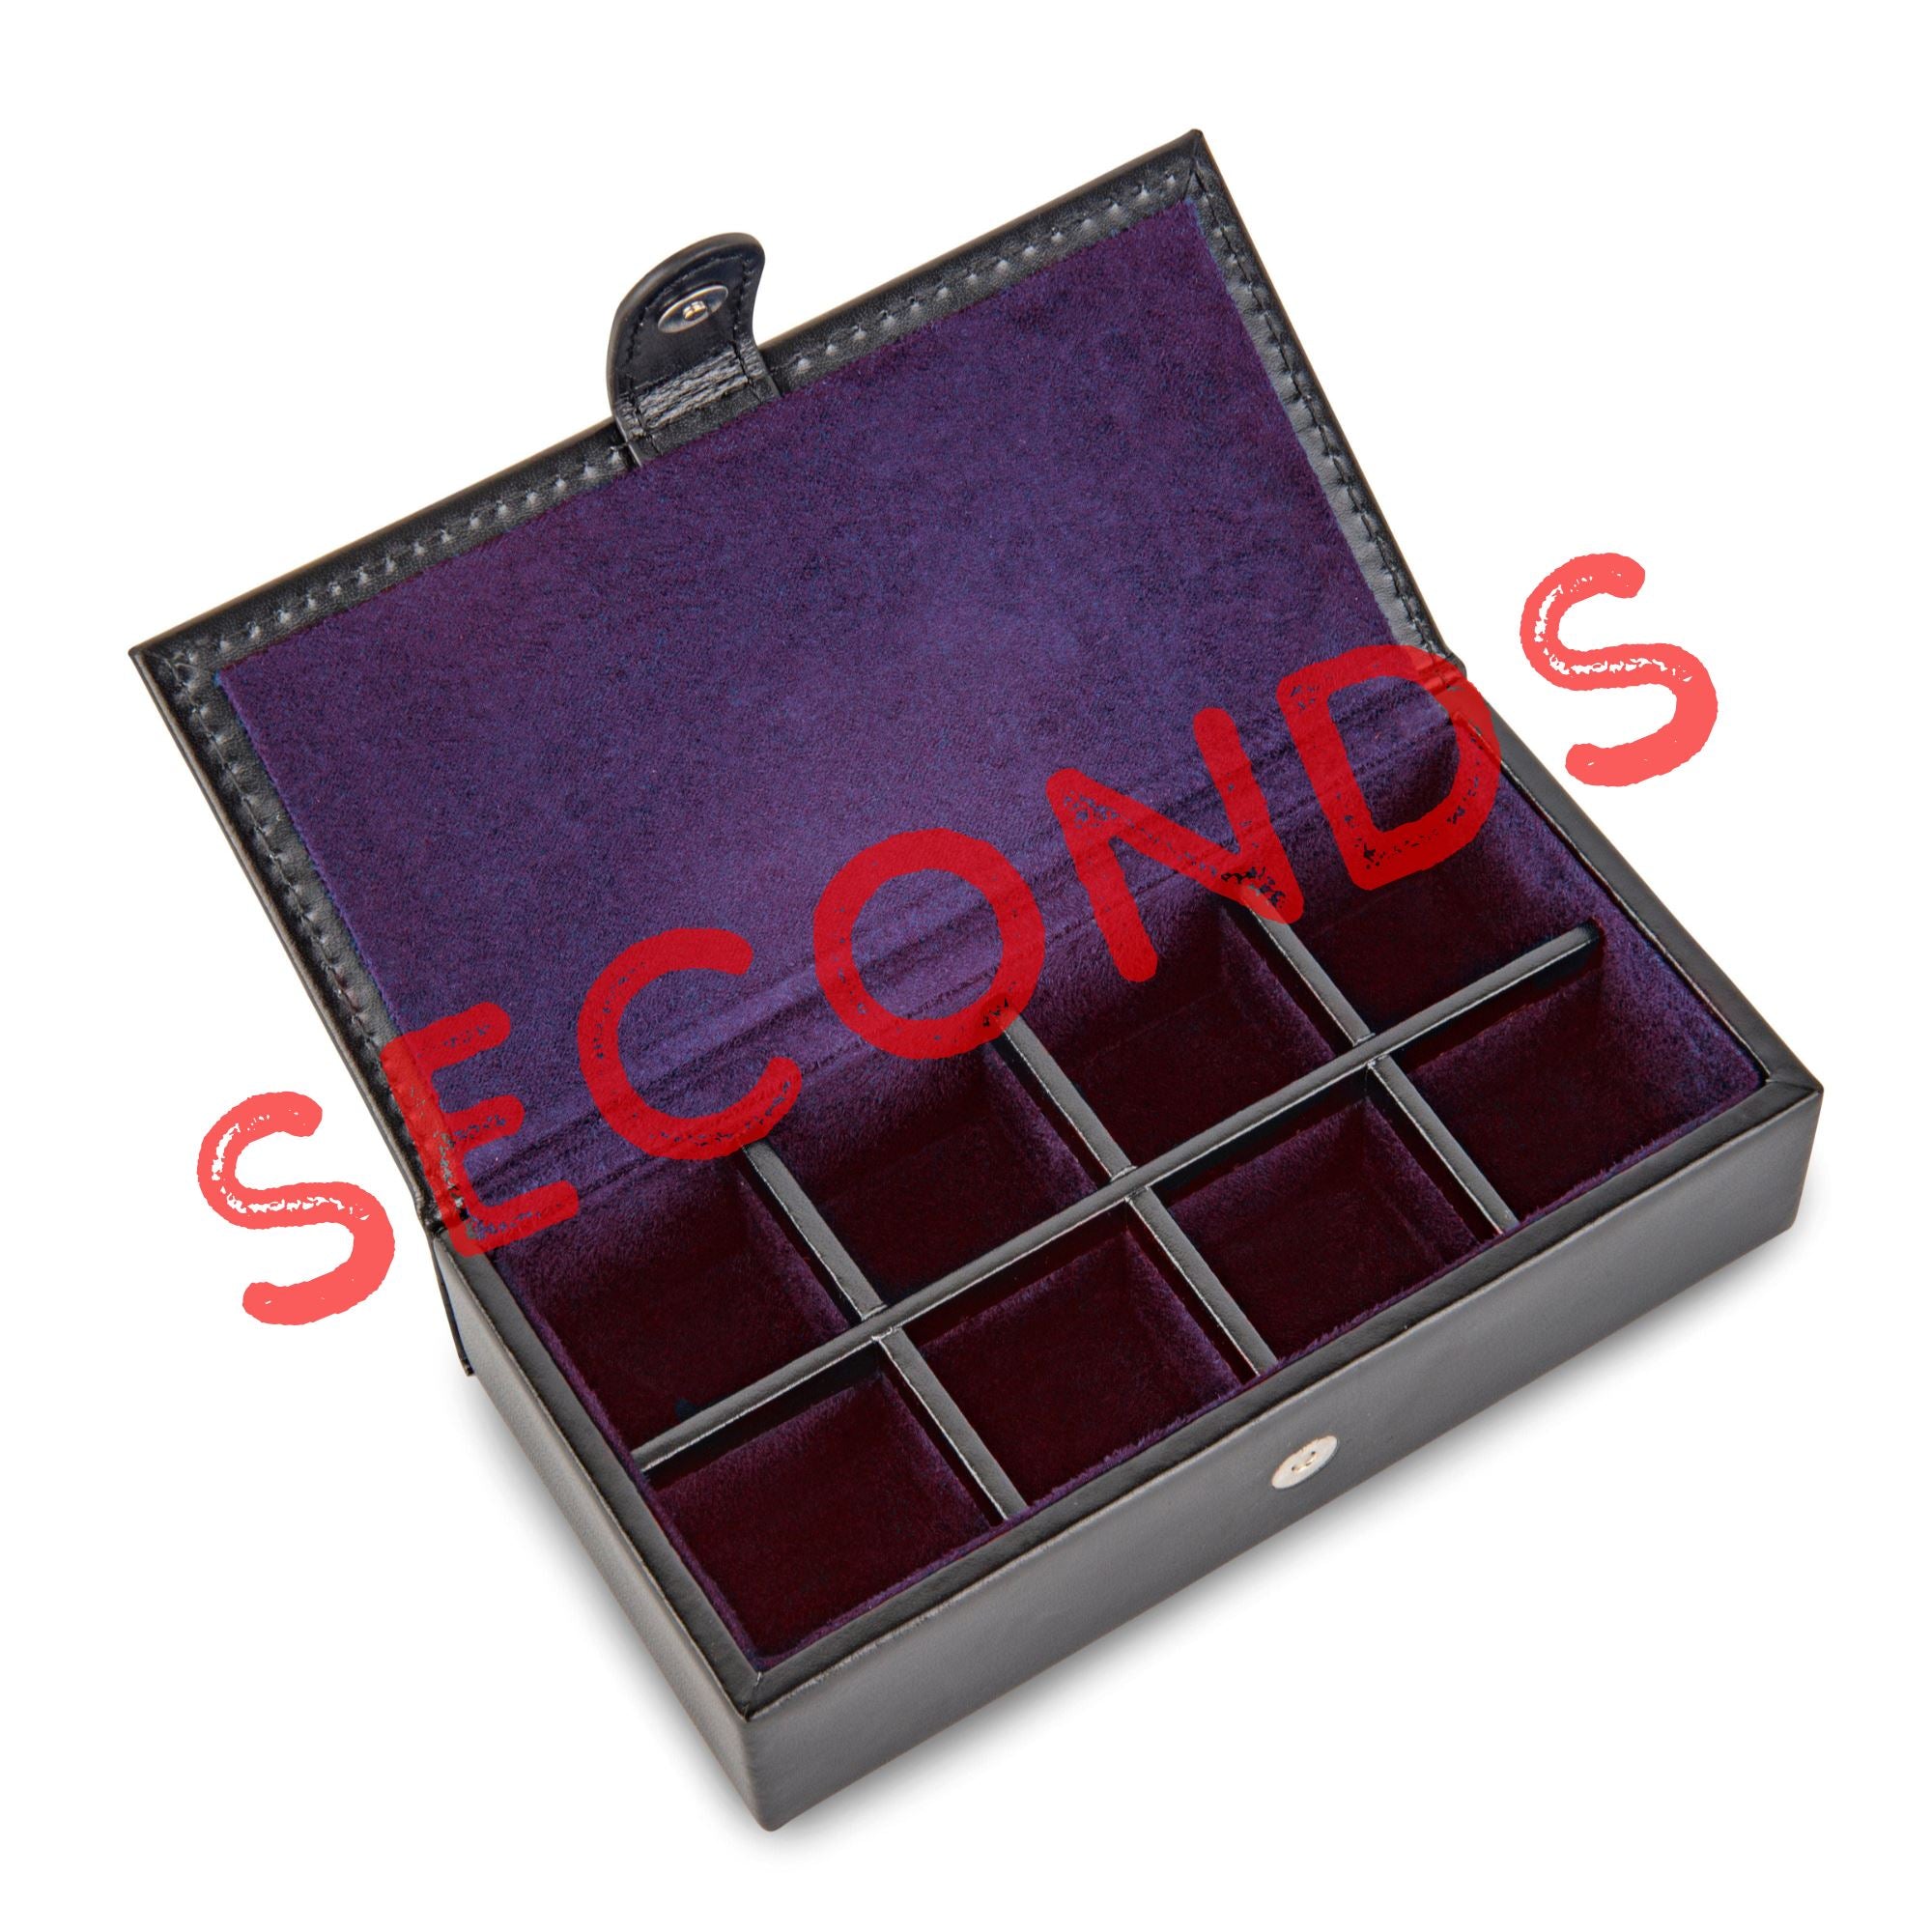 Seconds - 8 Pair Bonded Leather Black/Purple Cufflink Storage Box Seconds Clinks Australia 